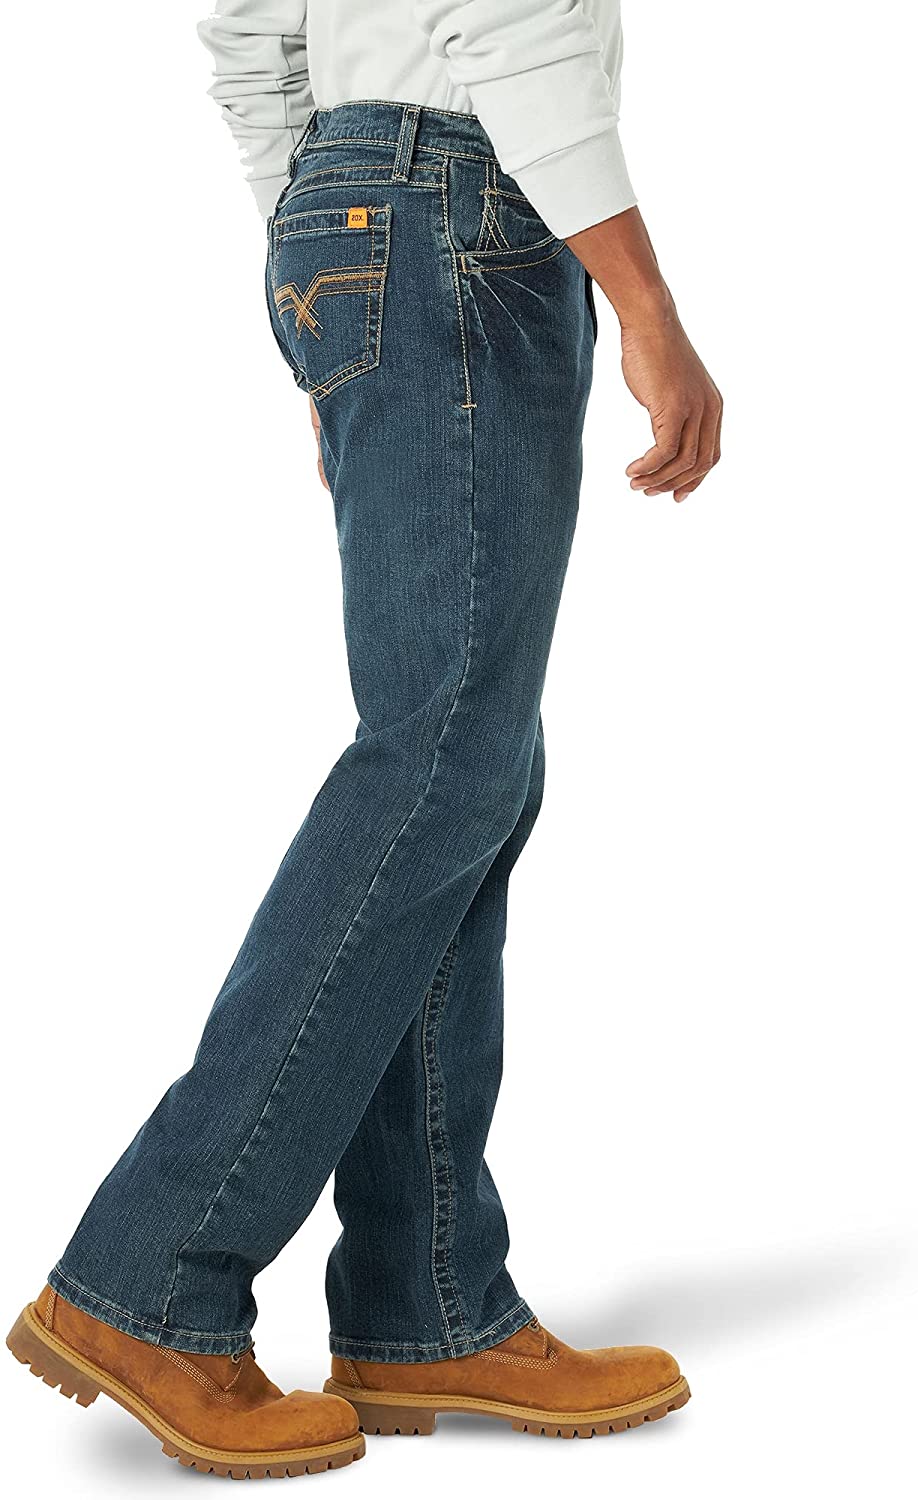 Vintage 20X Wrangler FR Bootcut Jeans